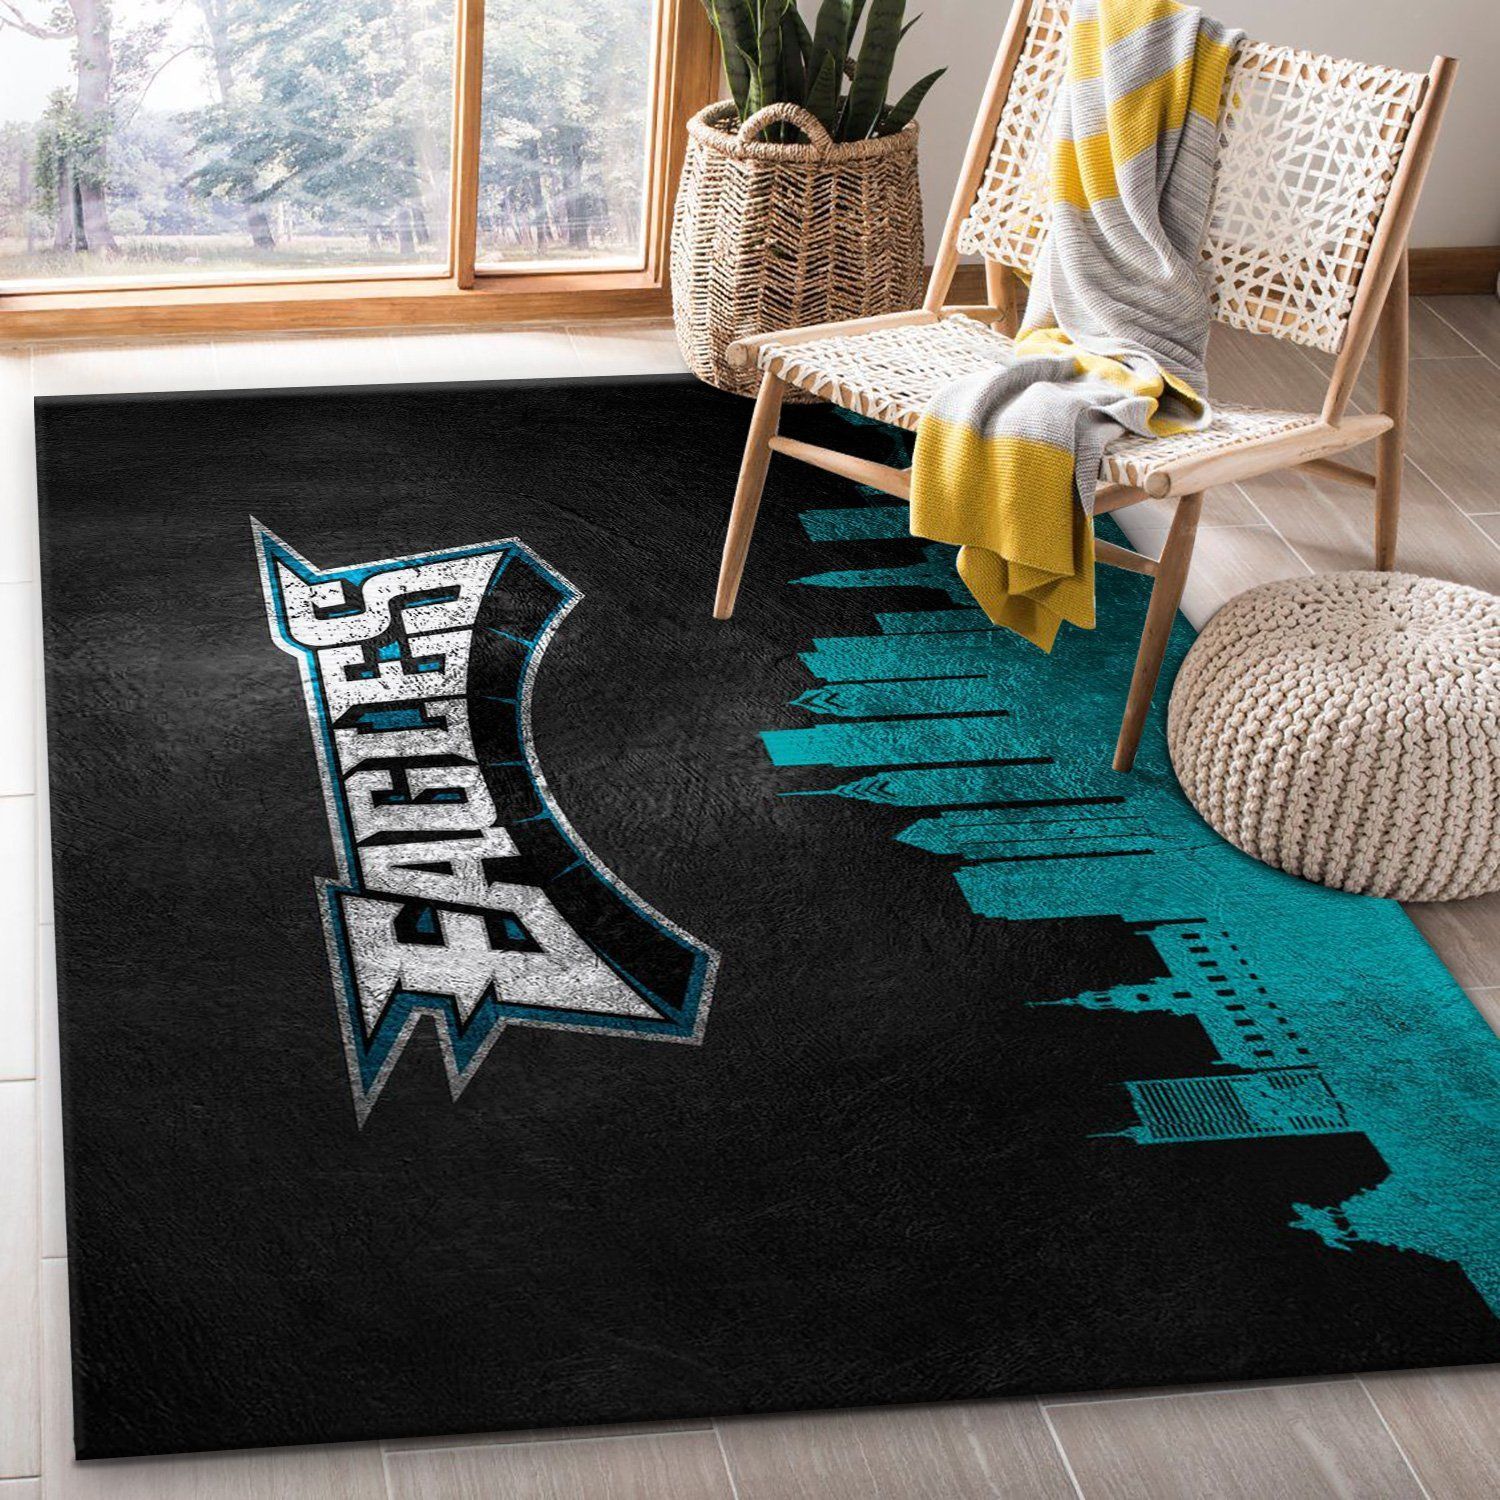 Philadelphia Eagles NFL Area Rug Carpet